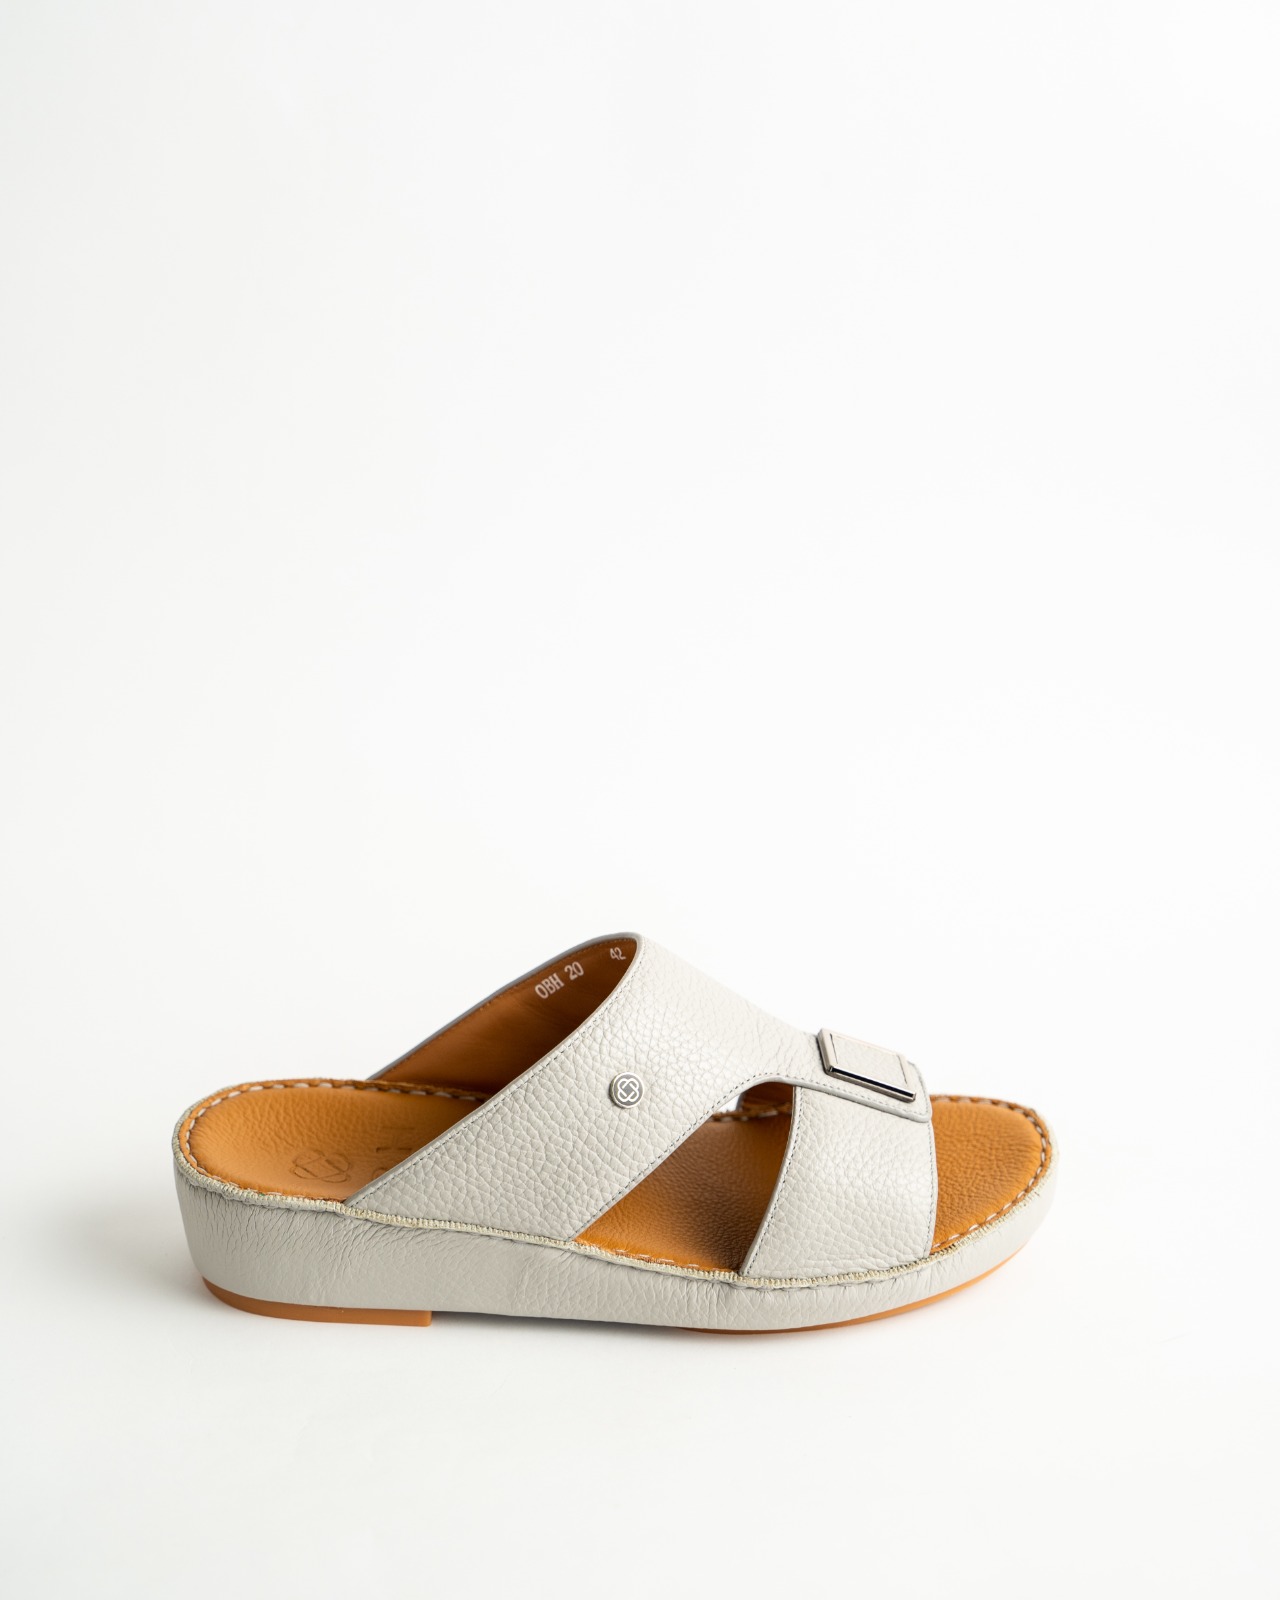 Buy OBH Men Sandals Model 20 L.T Grey Color Online in UAE | OBH Collection